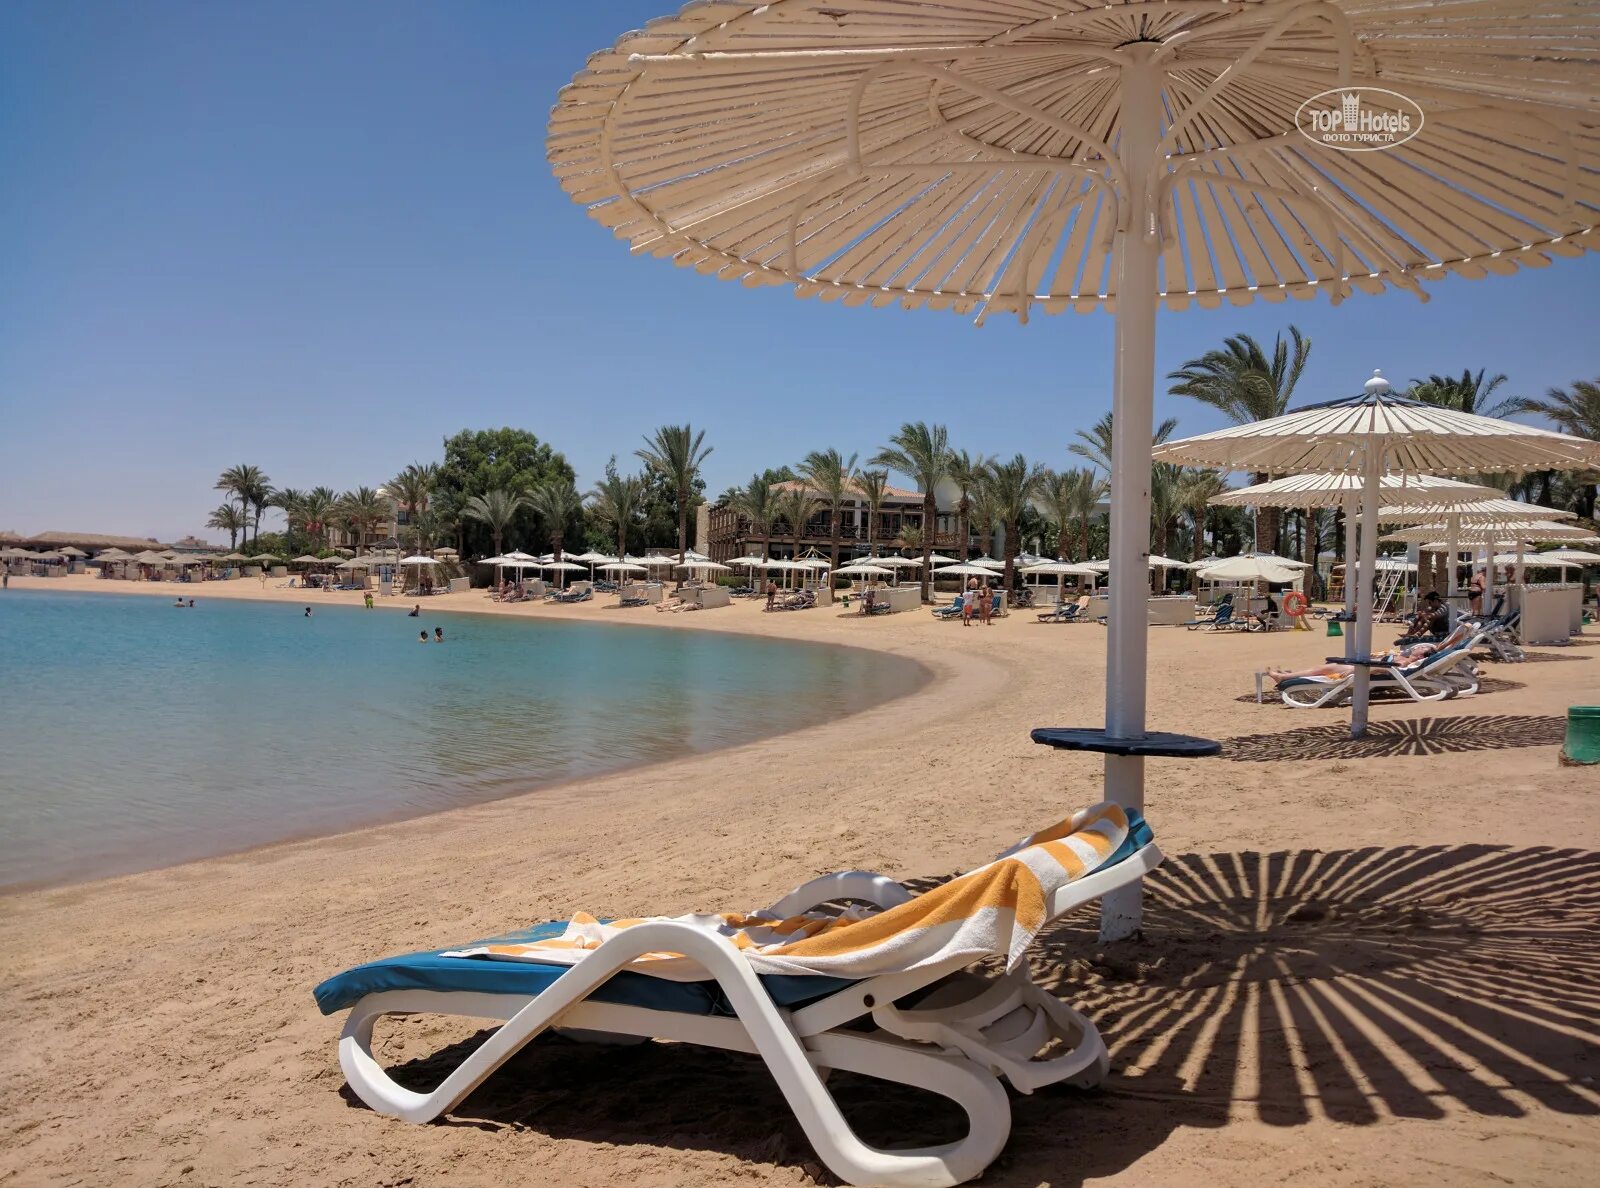 Swiss inn hurghada 5 хургада. Swiss Inn Resort Hurghada 5. Свисс ИНН Резорт Хургада 5.